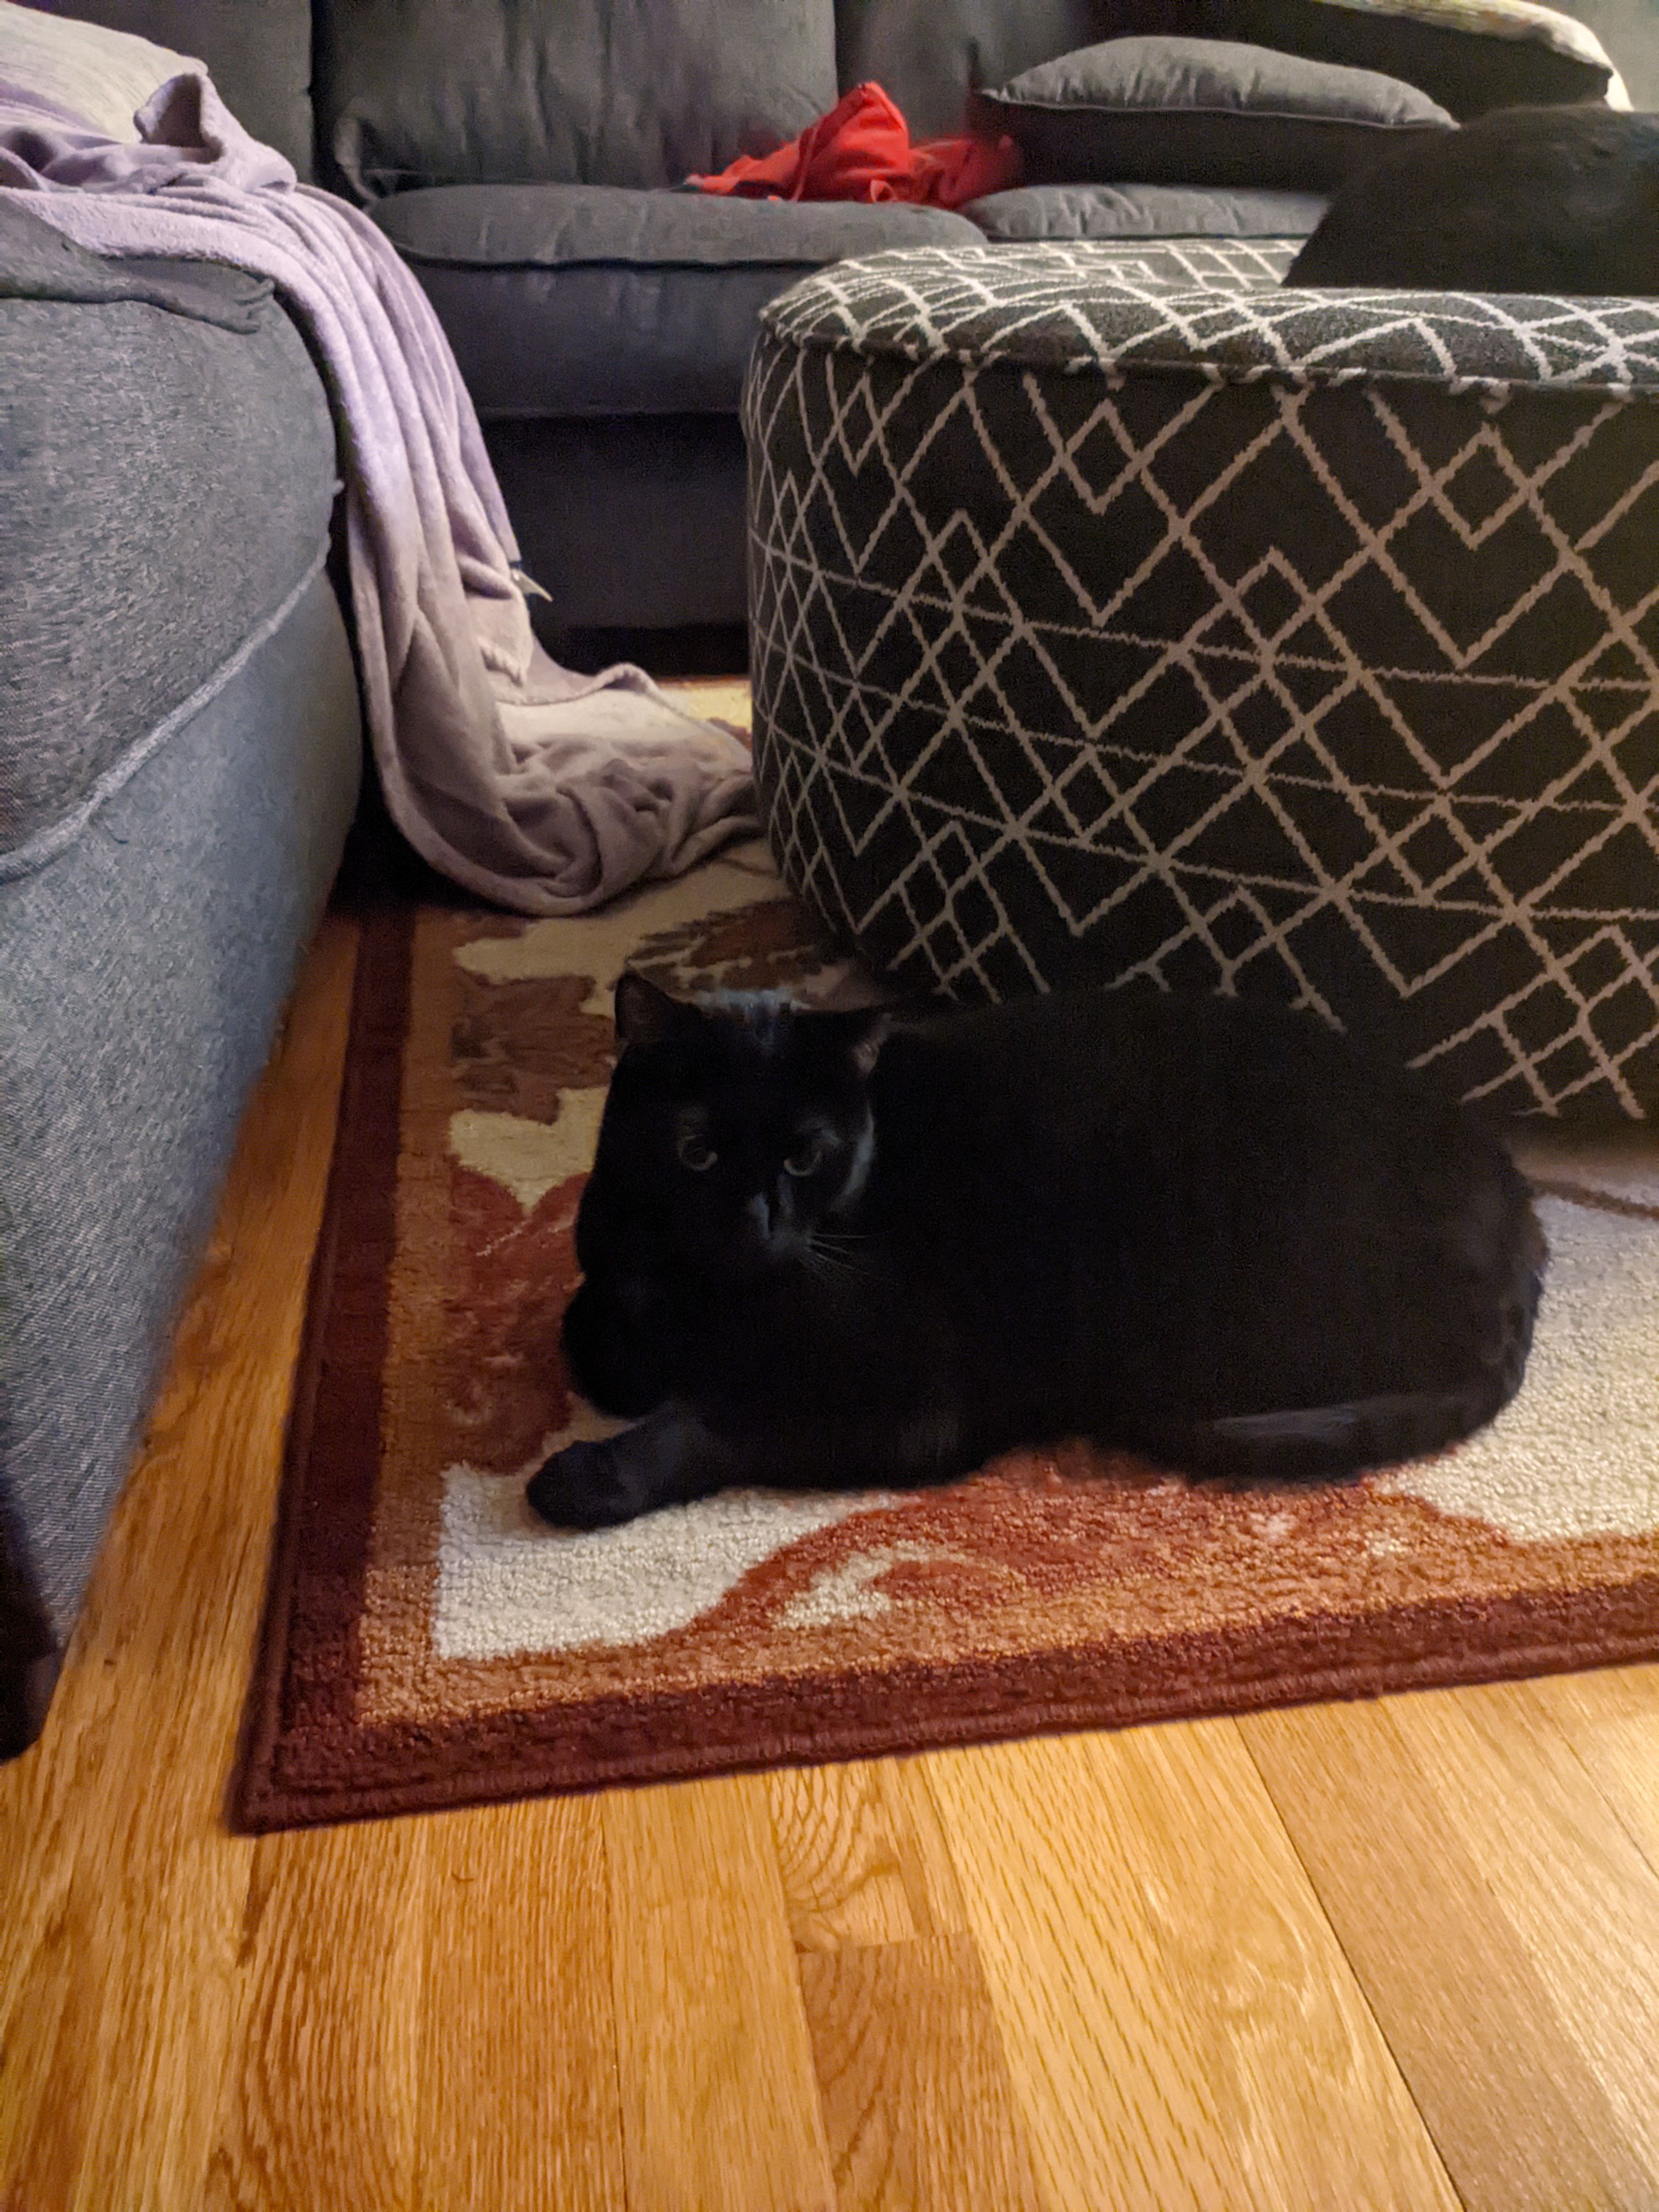 A black cat sitting on a carpet at night taken on a Pixel 4a 5G